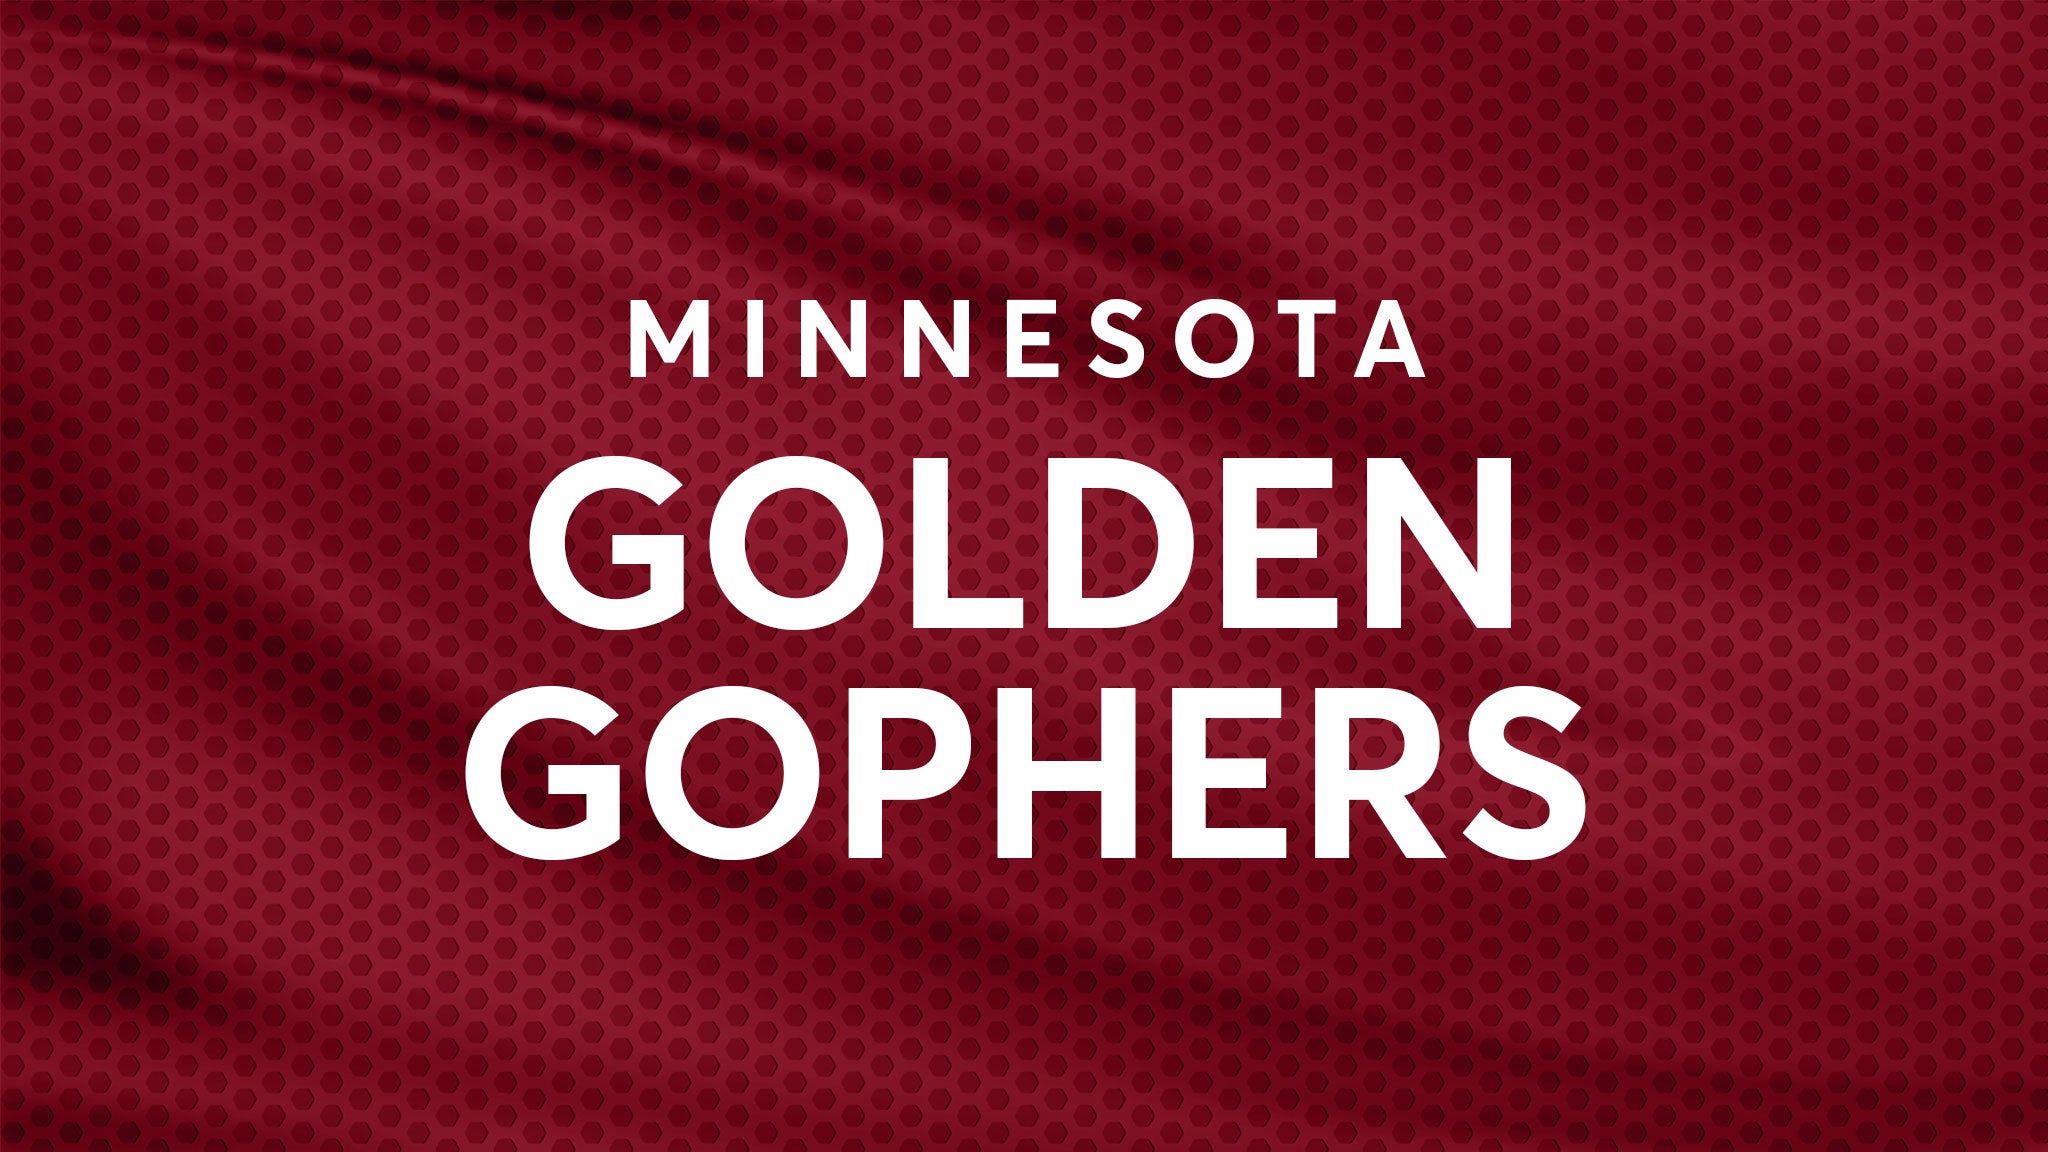 Minnesota Gophers Football vs. North Carolina Tar Heels Football hero